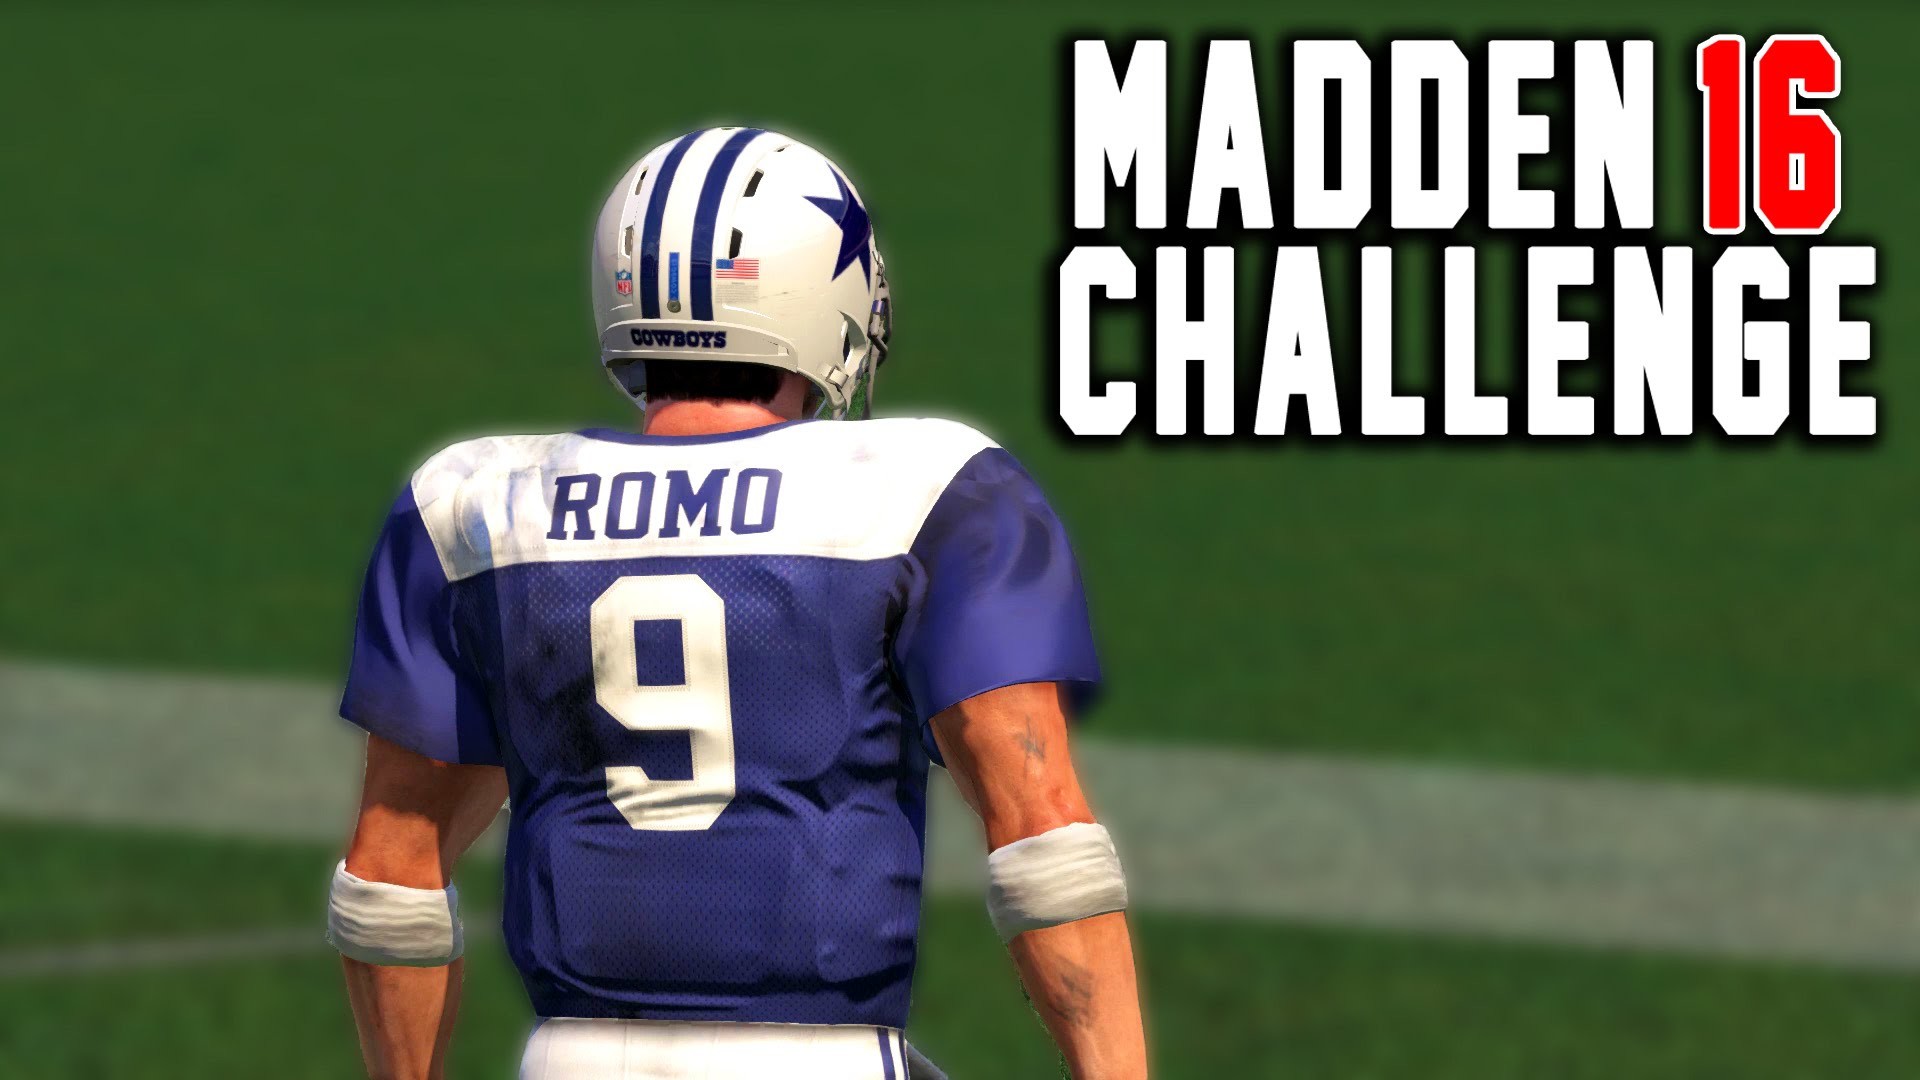 1920x1080 Tony Romo Kick Return! - Kick Returning With Quarterbacks! - Madden 16 NFL  Challenge! - YouTube